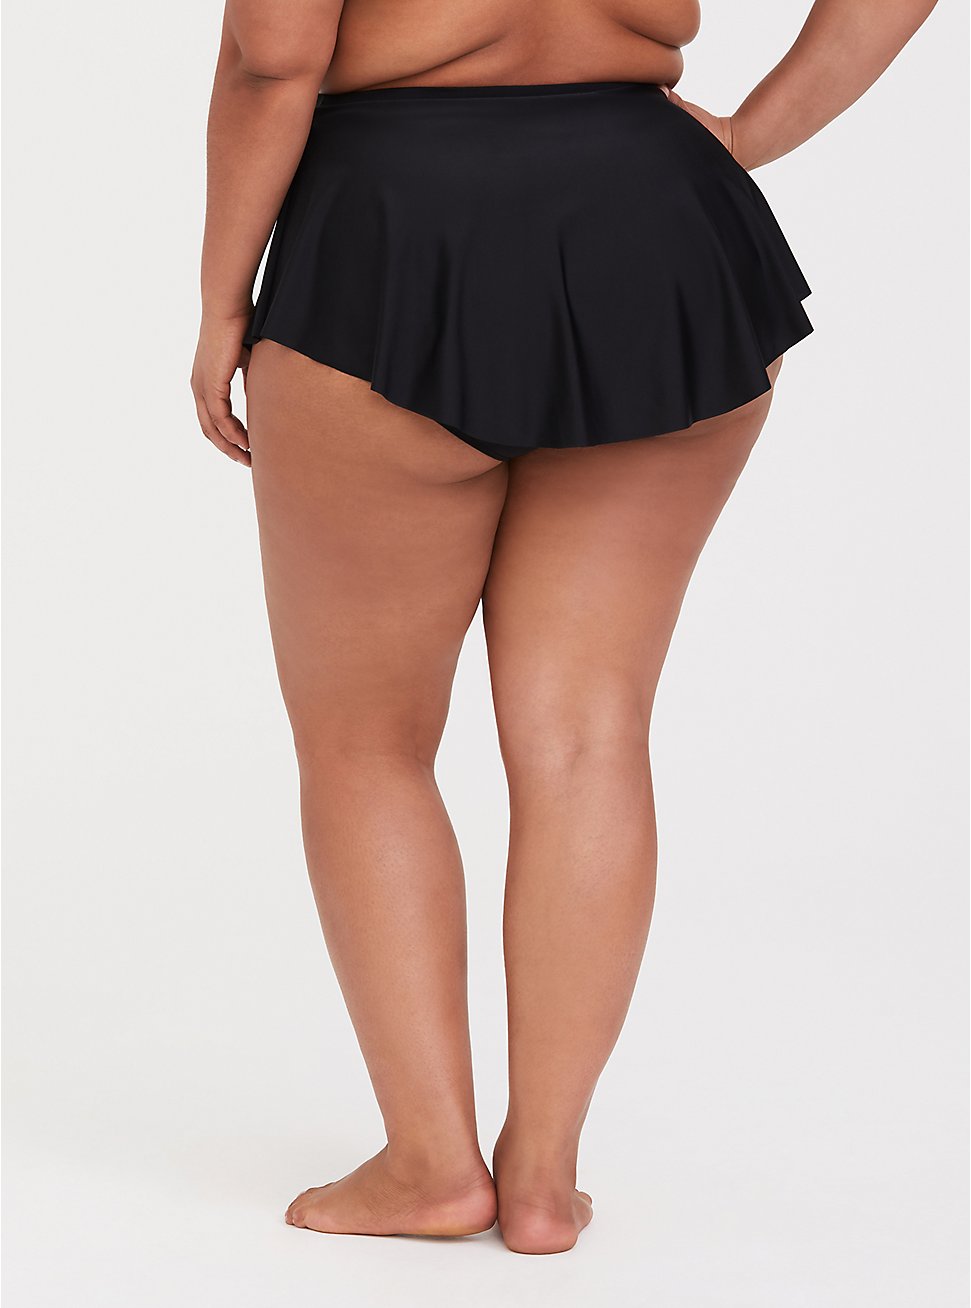 High-Rise High-Low Swim Skirt With Brief, DEEP BLACK, hi-res